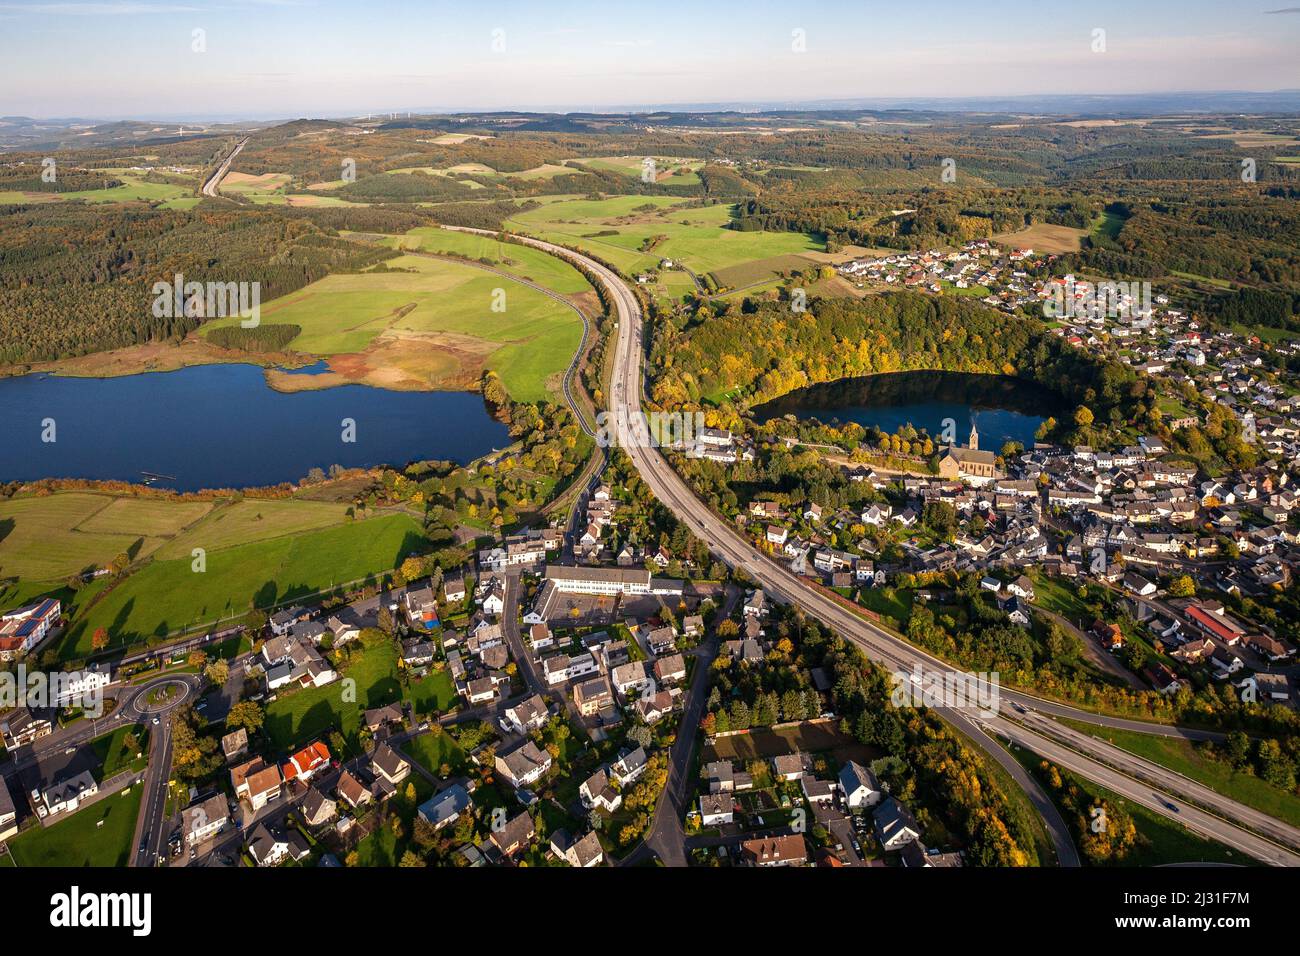 Federal motorway A48 near Ulmen, Jungfernweiher, Ulmener Maar, Vulkaneifel, Germany, Stock Photo